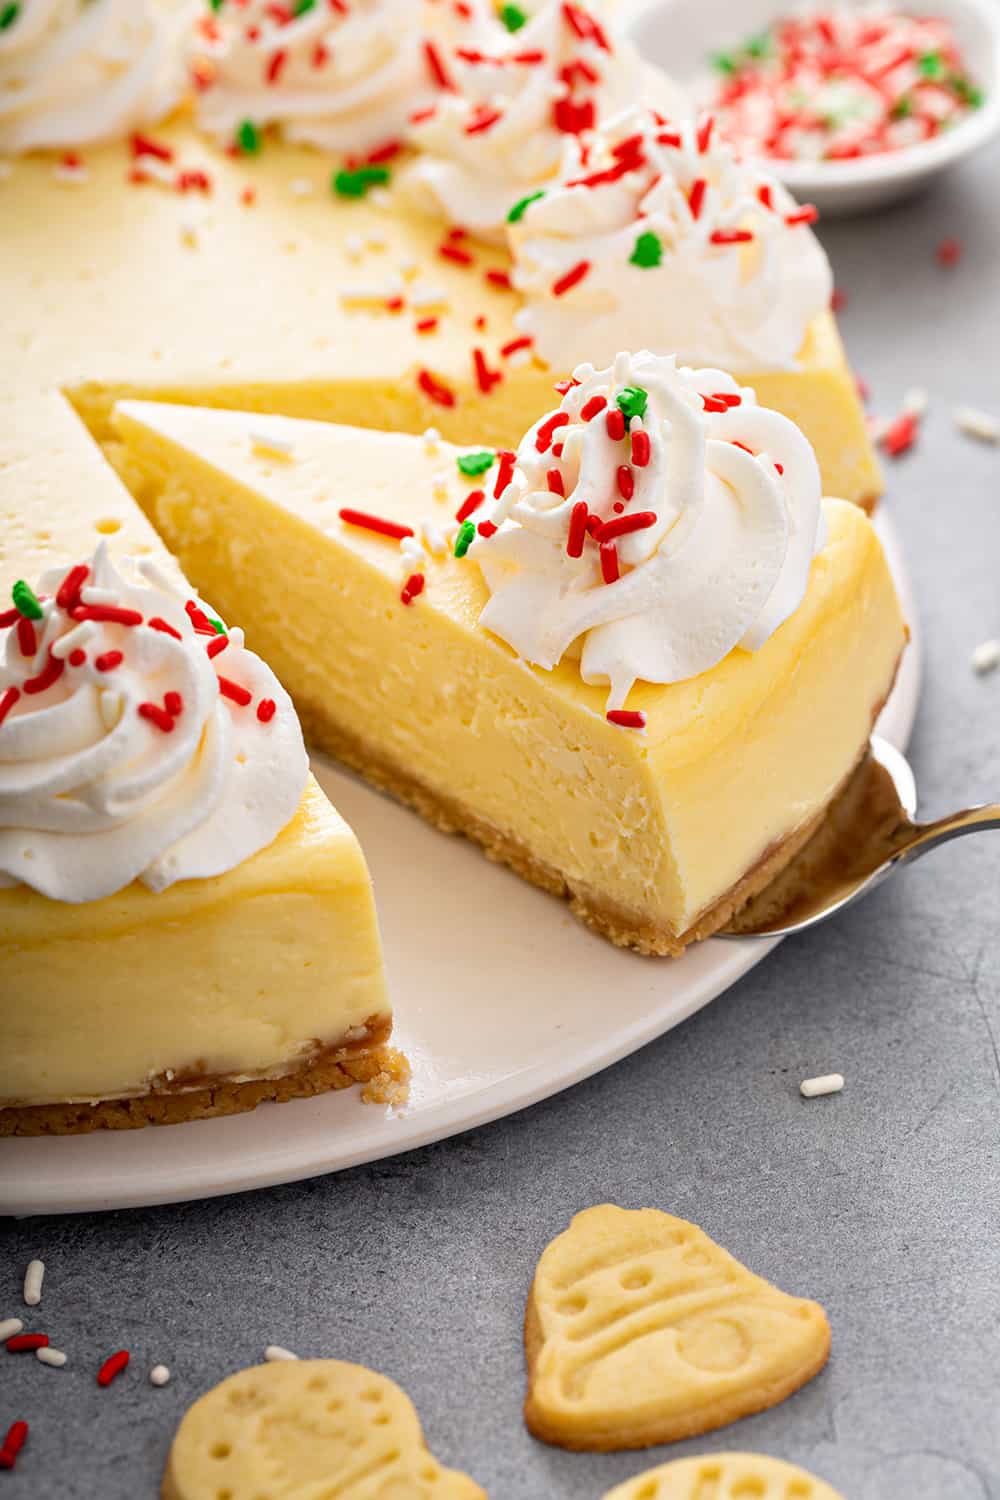 https://www.mybakingaddiction.com/wp-content/uploads/2015/12/slice-of-sugar-cookie-cheesecake.jpg